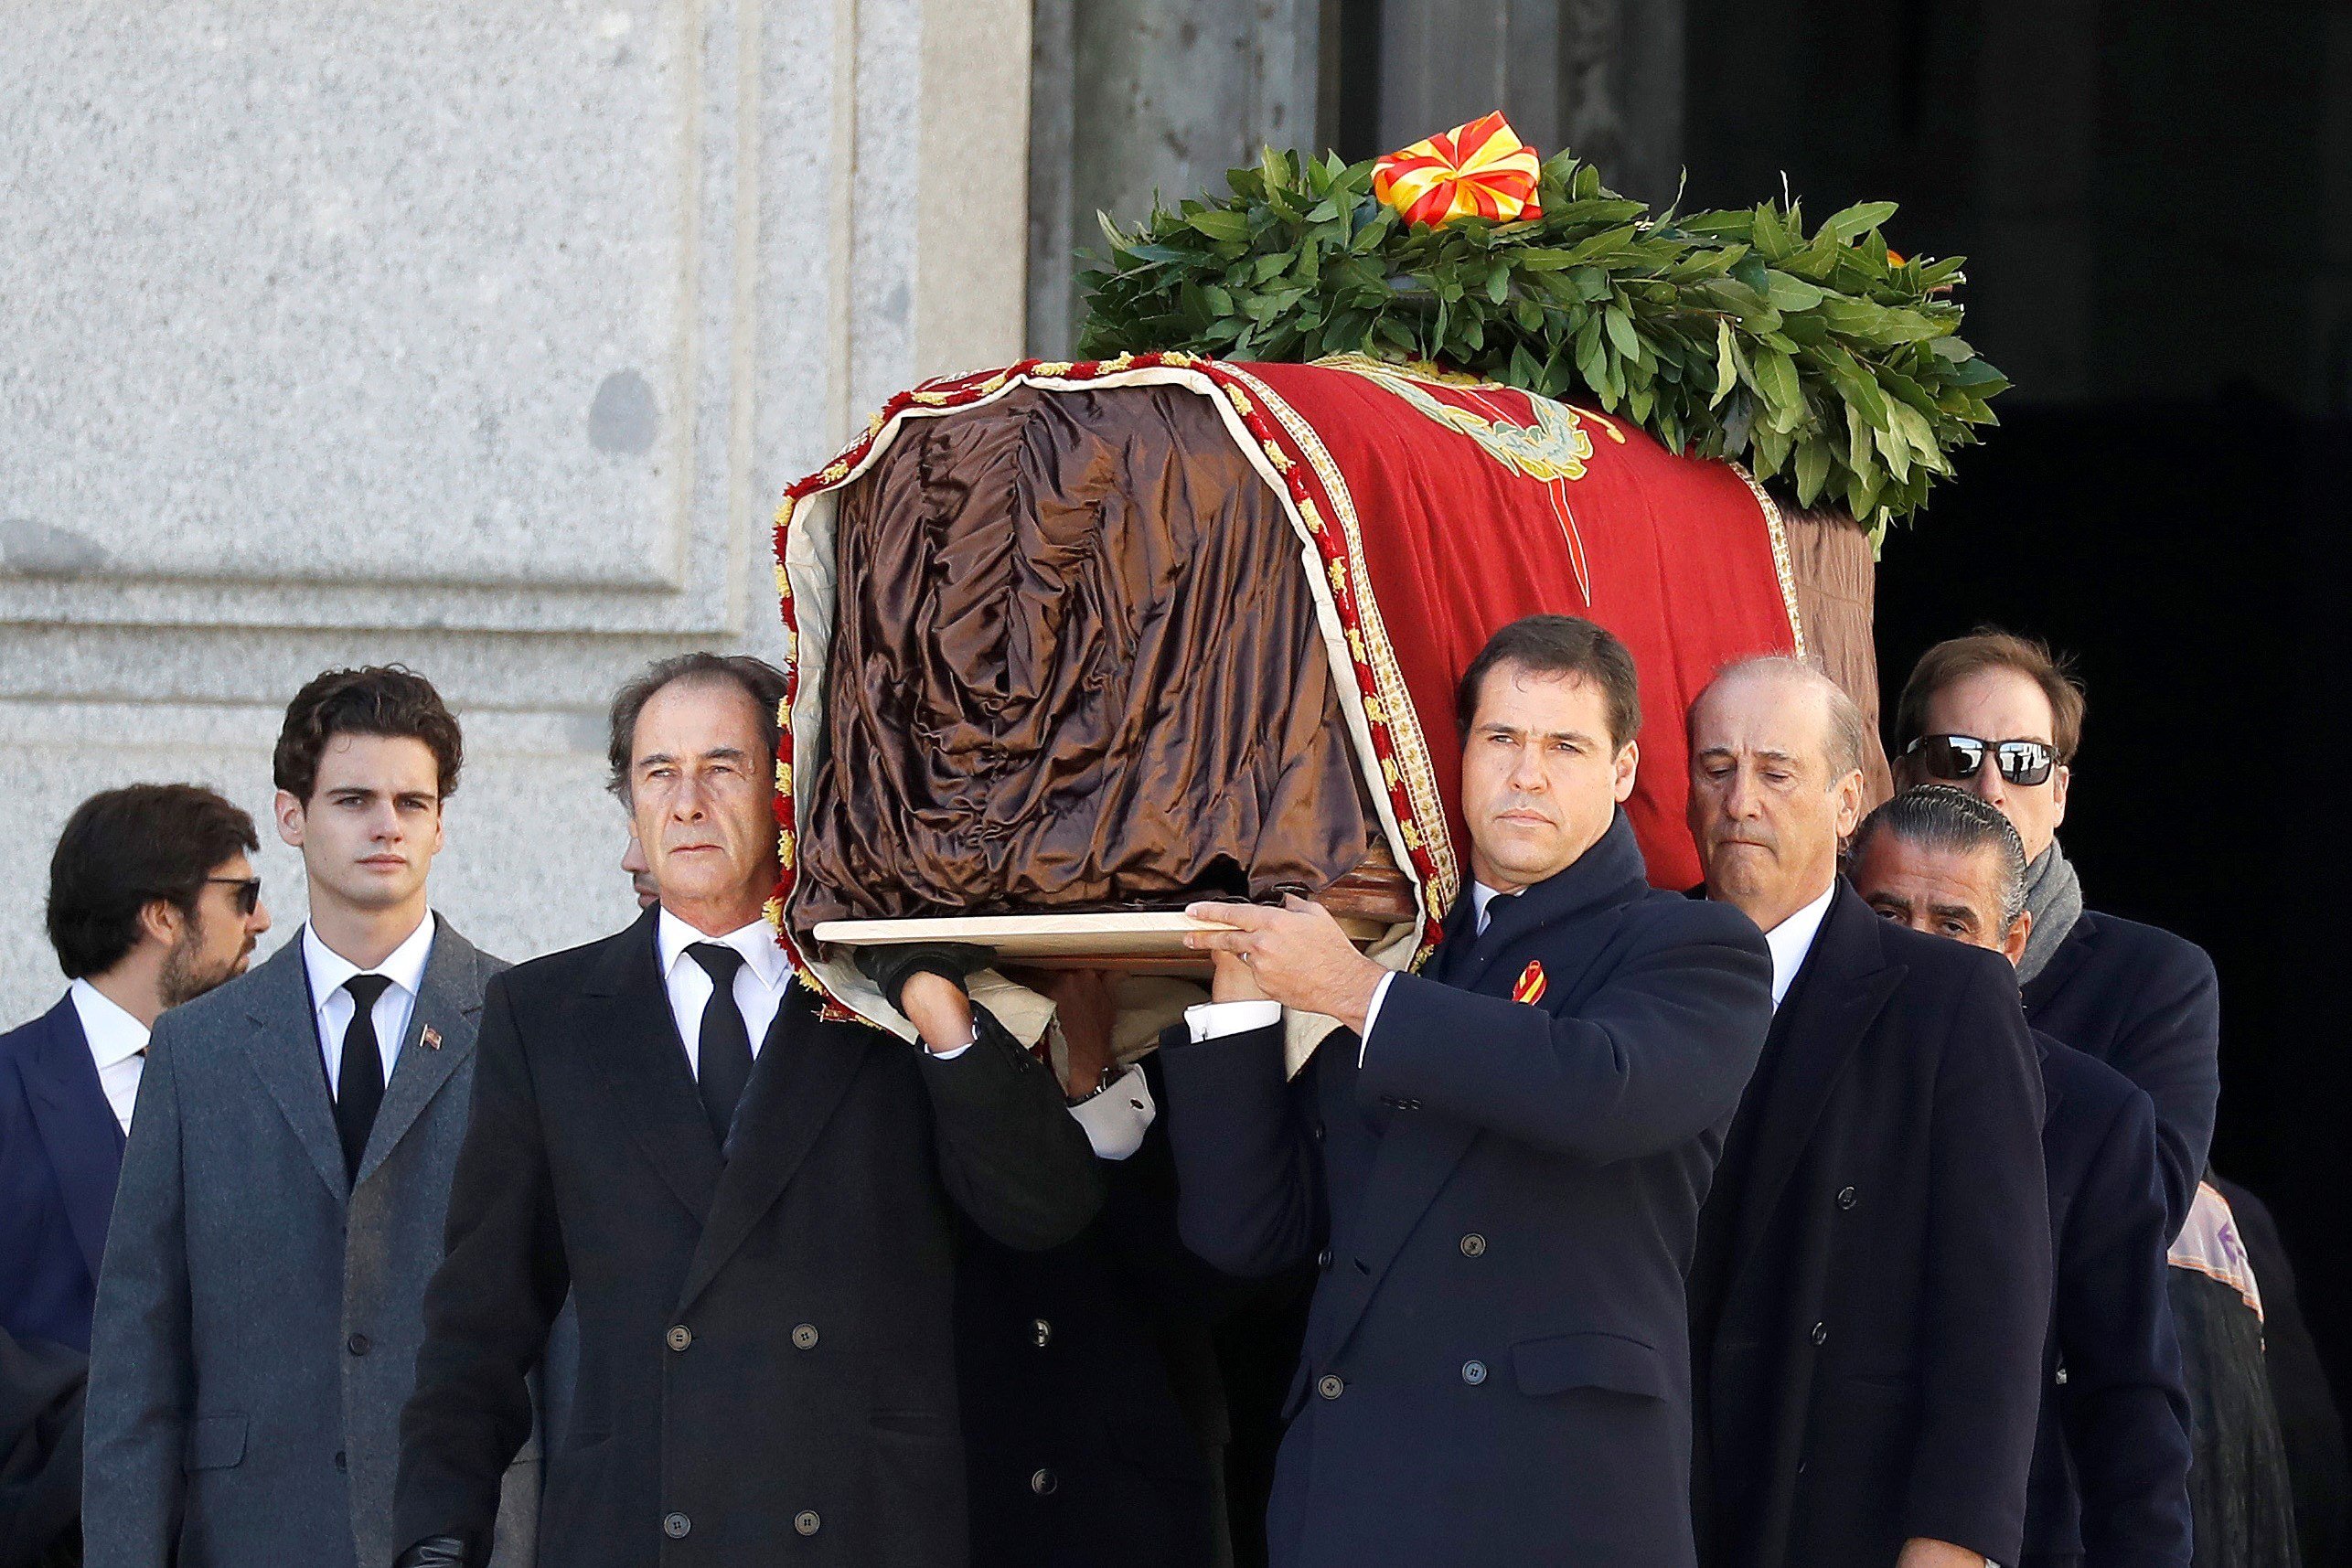 España consigue sacar a Franco del mausoleo en medio de un grotesco funeral de Estado